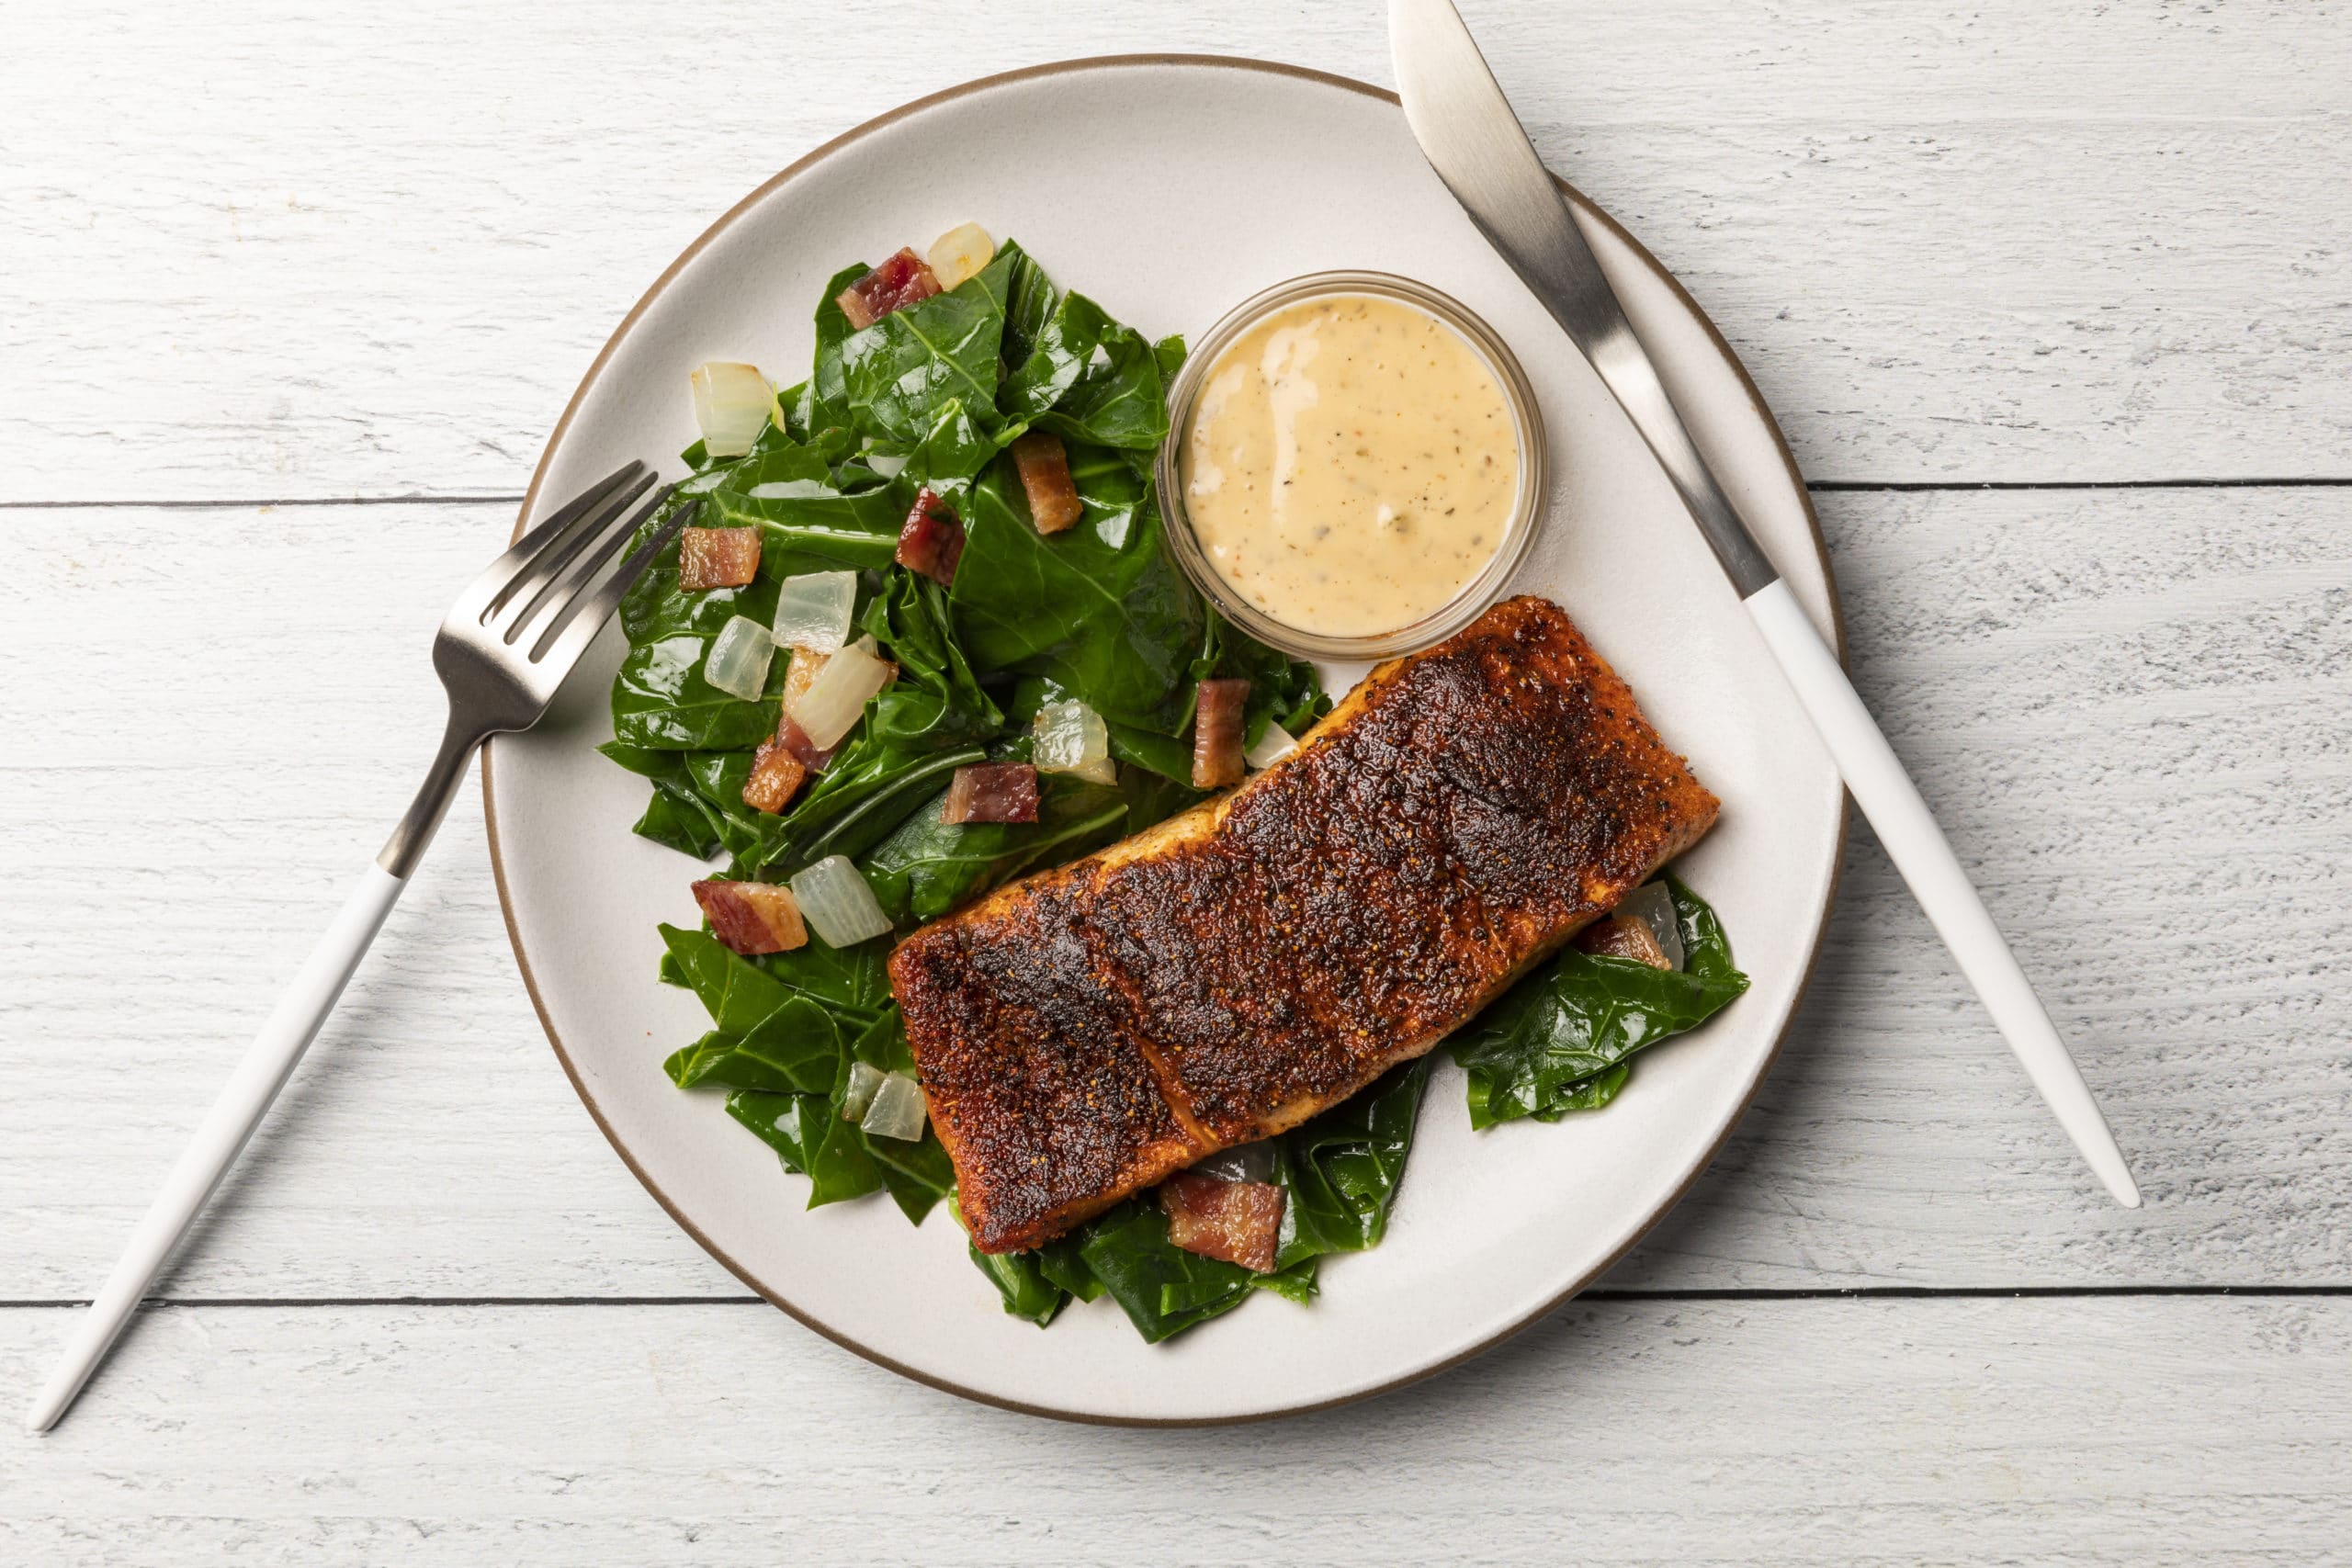 Gluten-free, keto-friendly, Whole30 approved Cajun Salmon